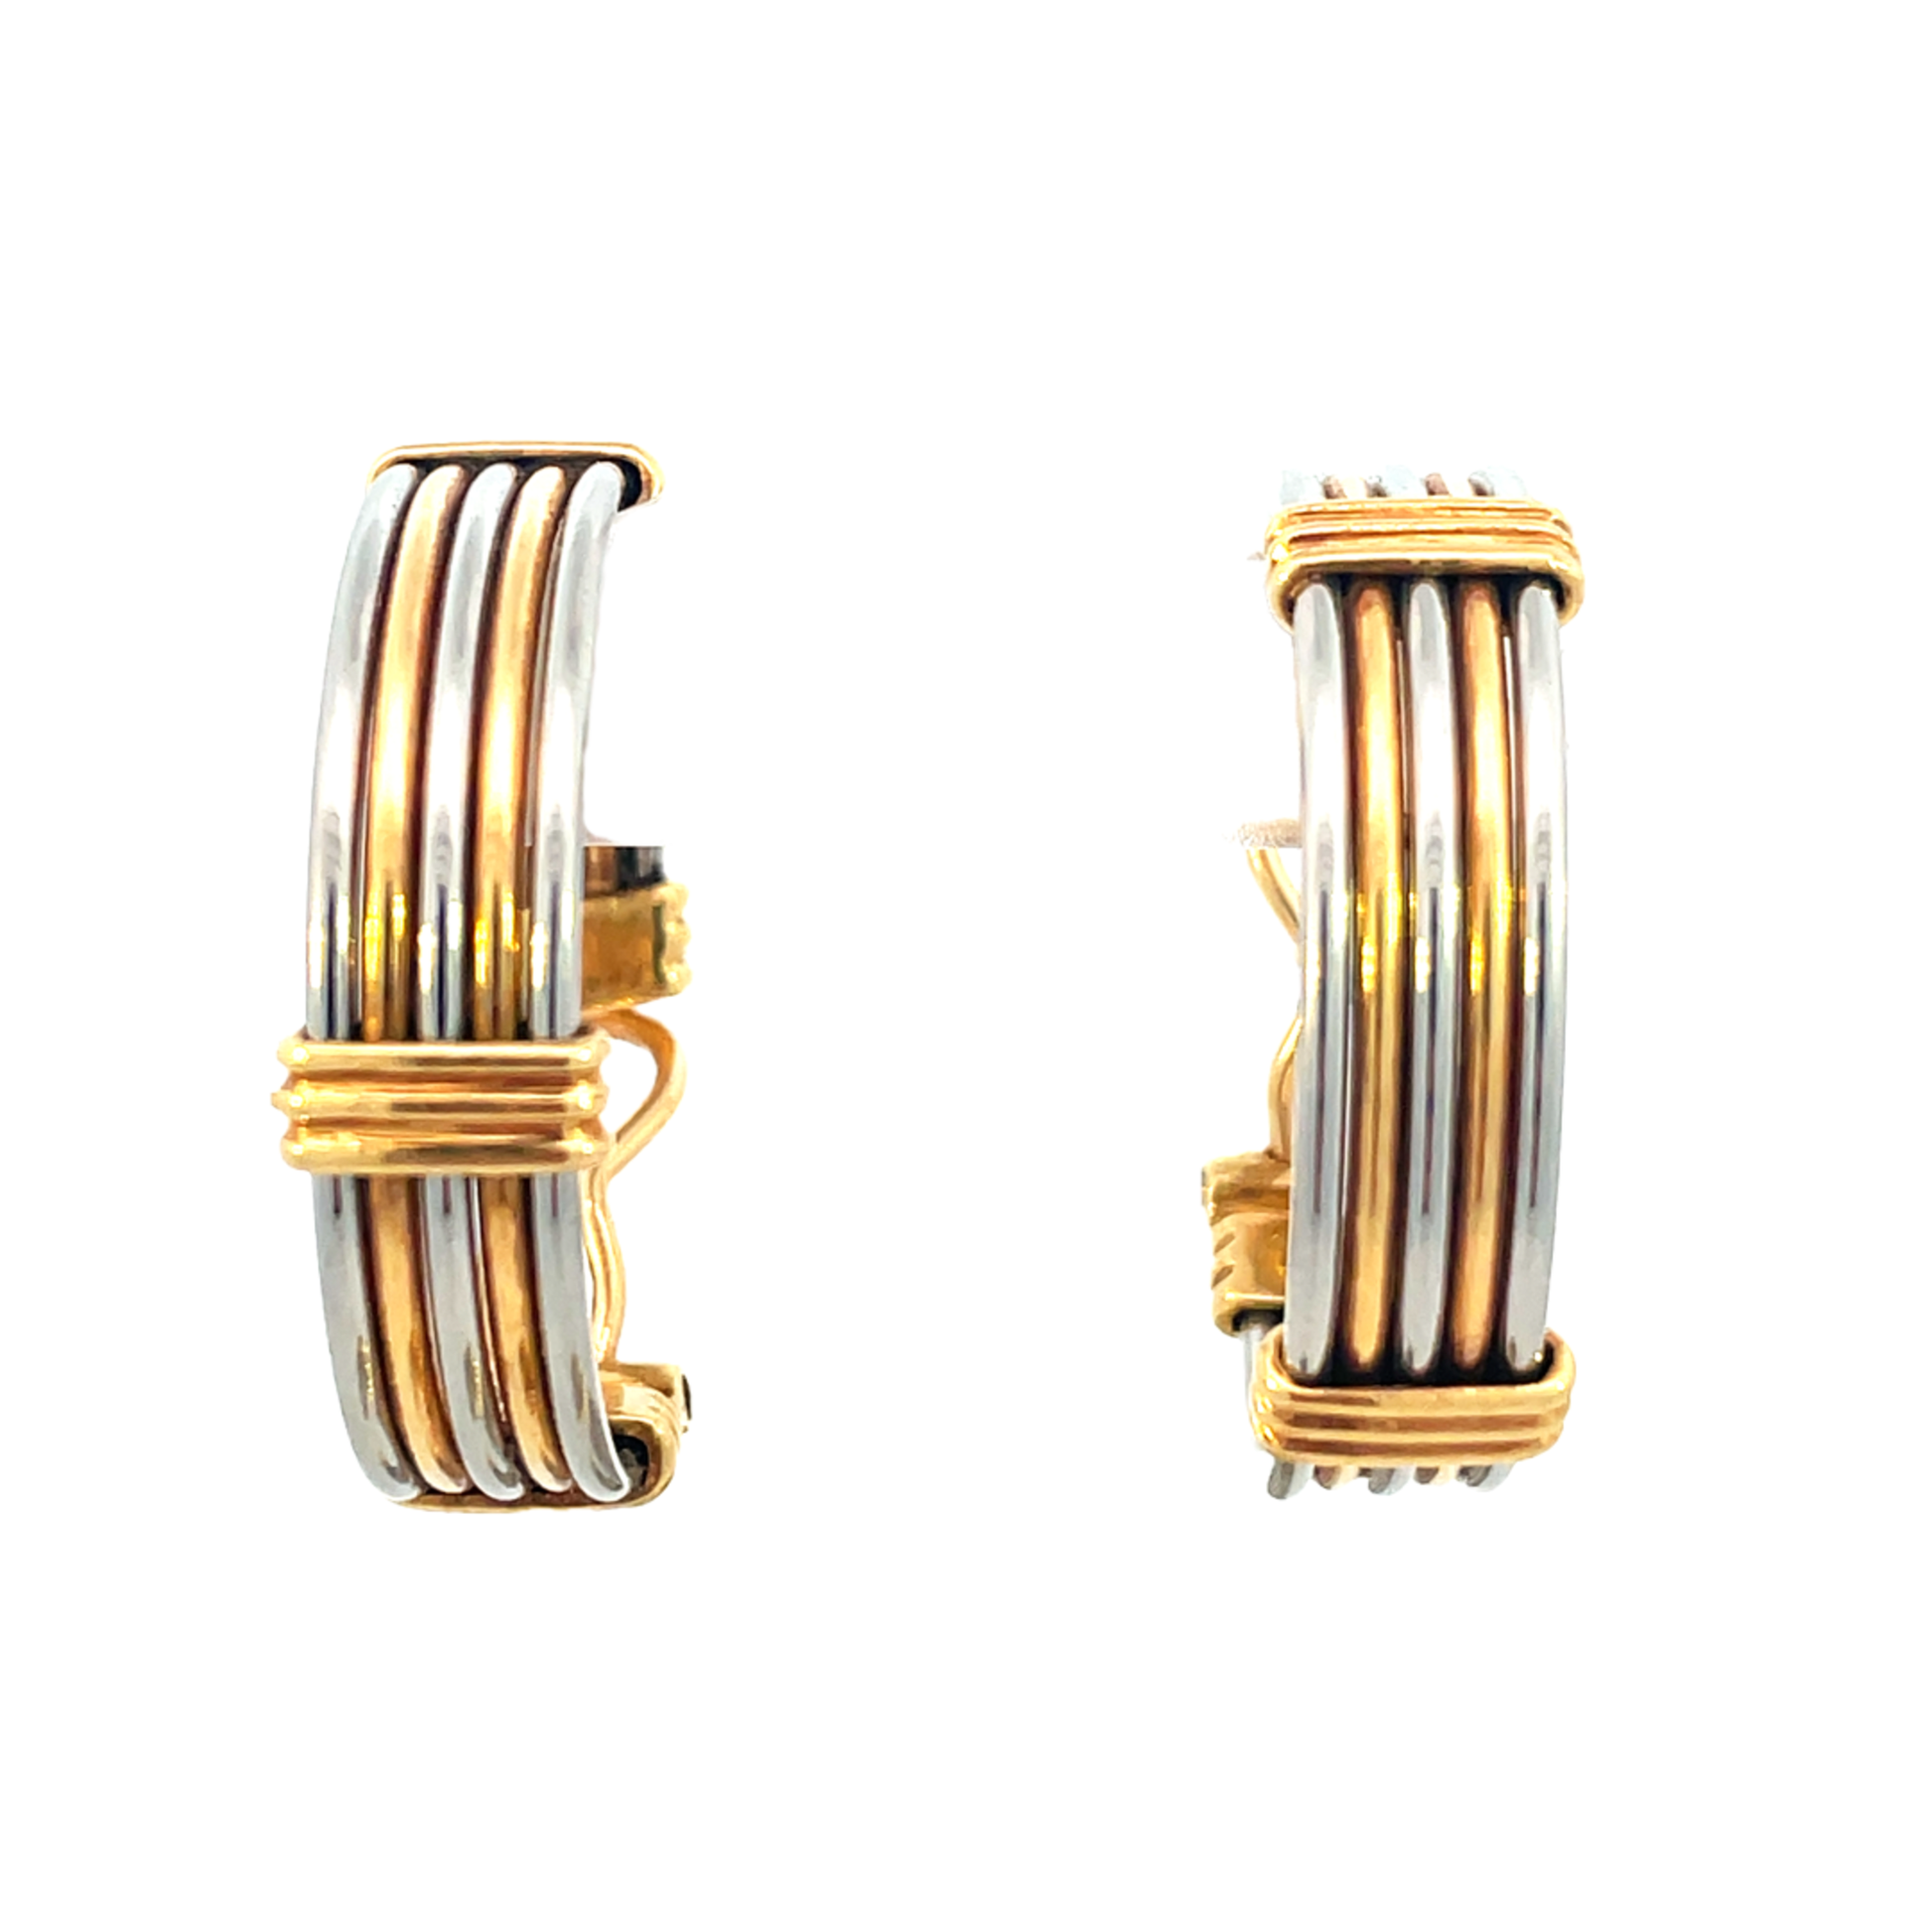 Cartier 1980s 18KT Yellow Gold Stainless Steel Earring & Bangle Bracelet Set earrings front